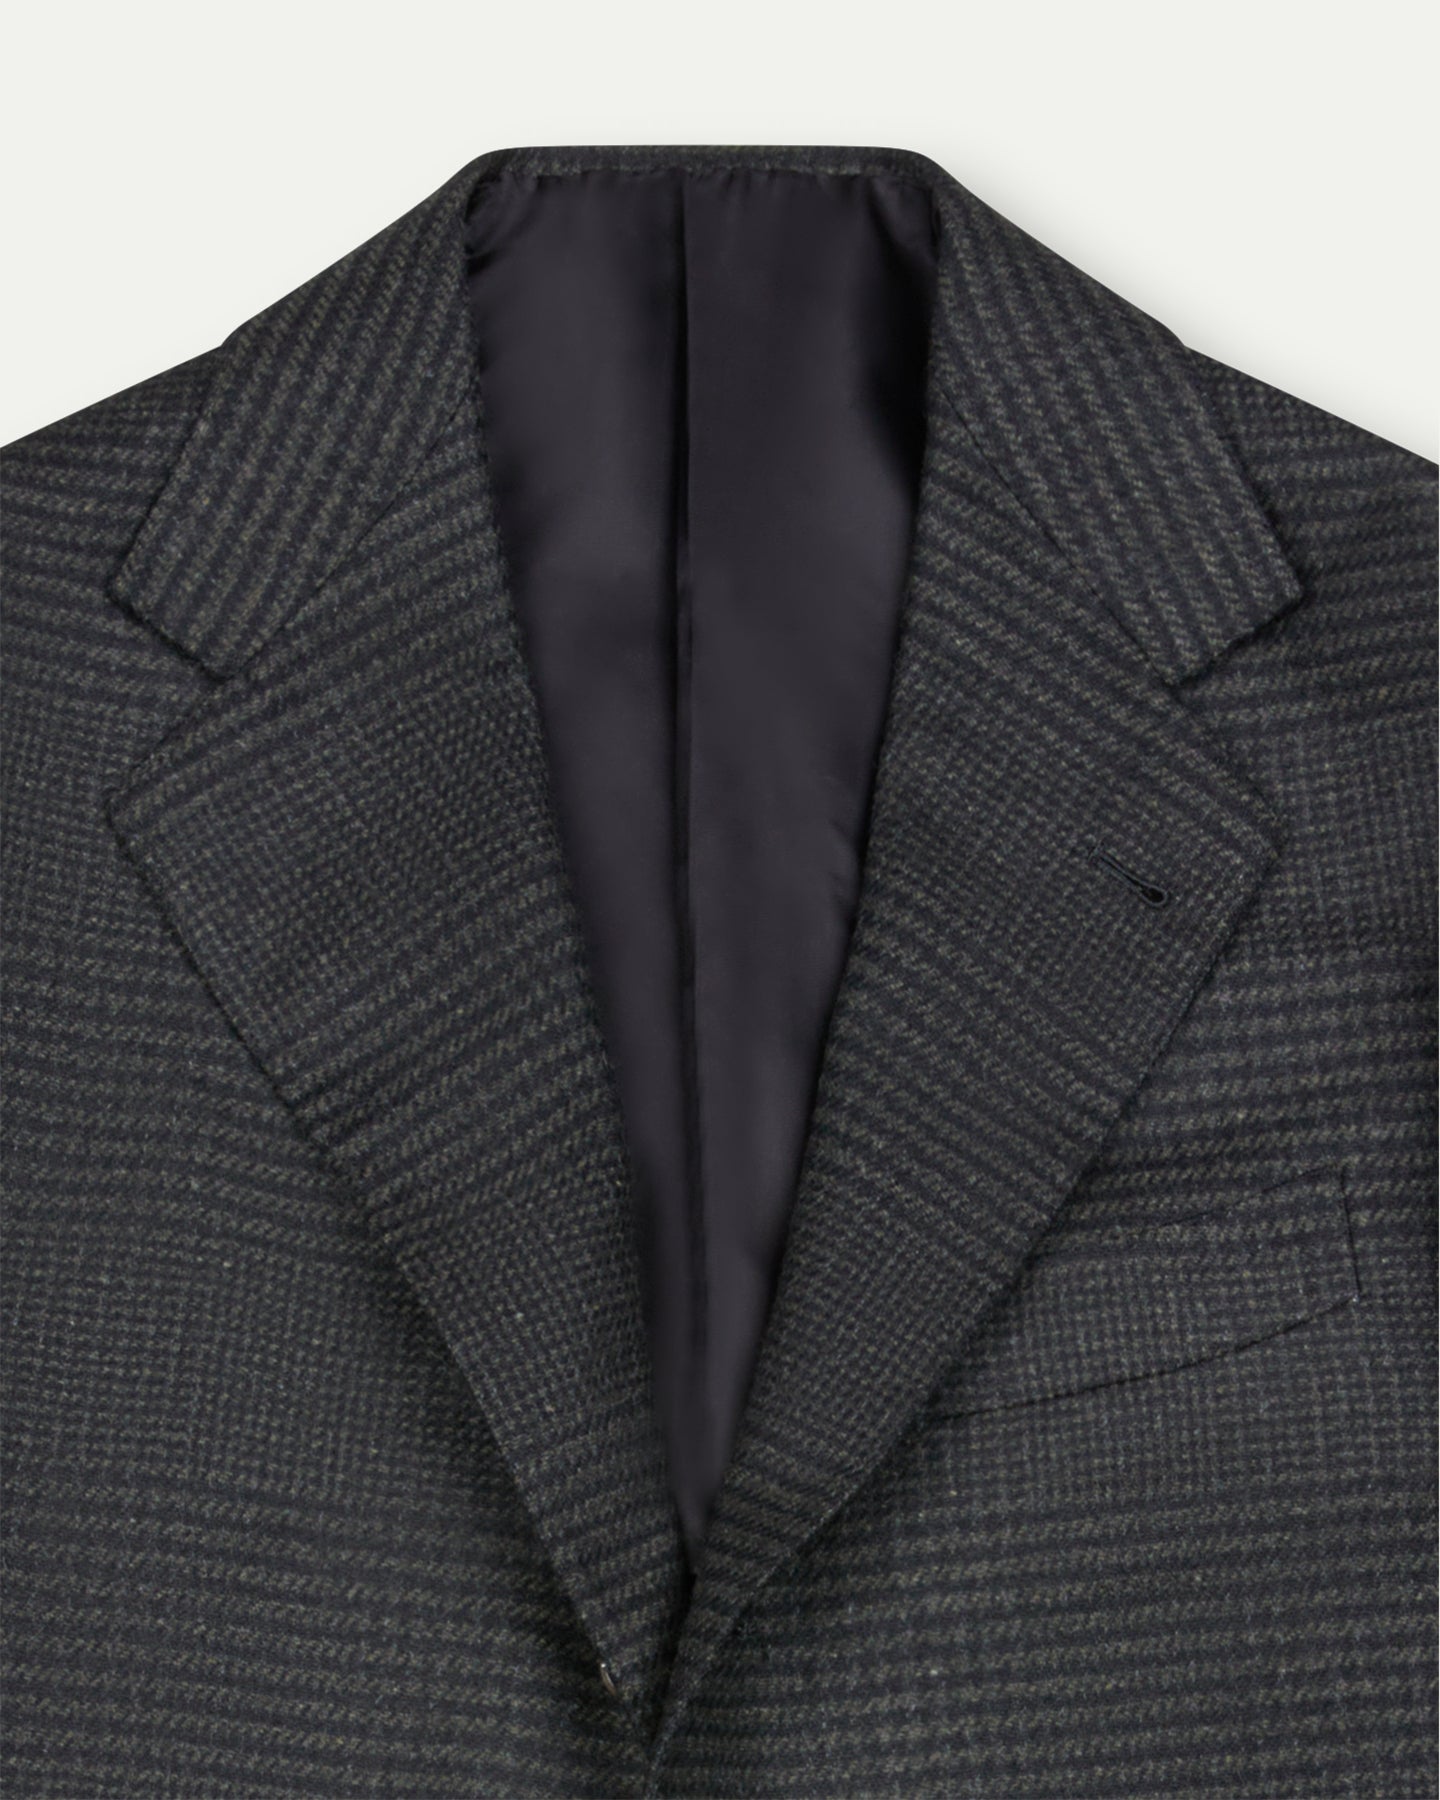 Made-To-Order Sport Coat Dark Grey Prince Of Wales | Besnard